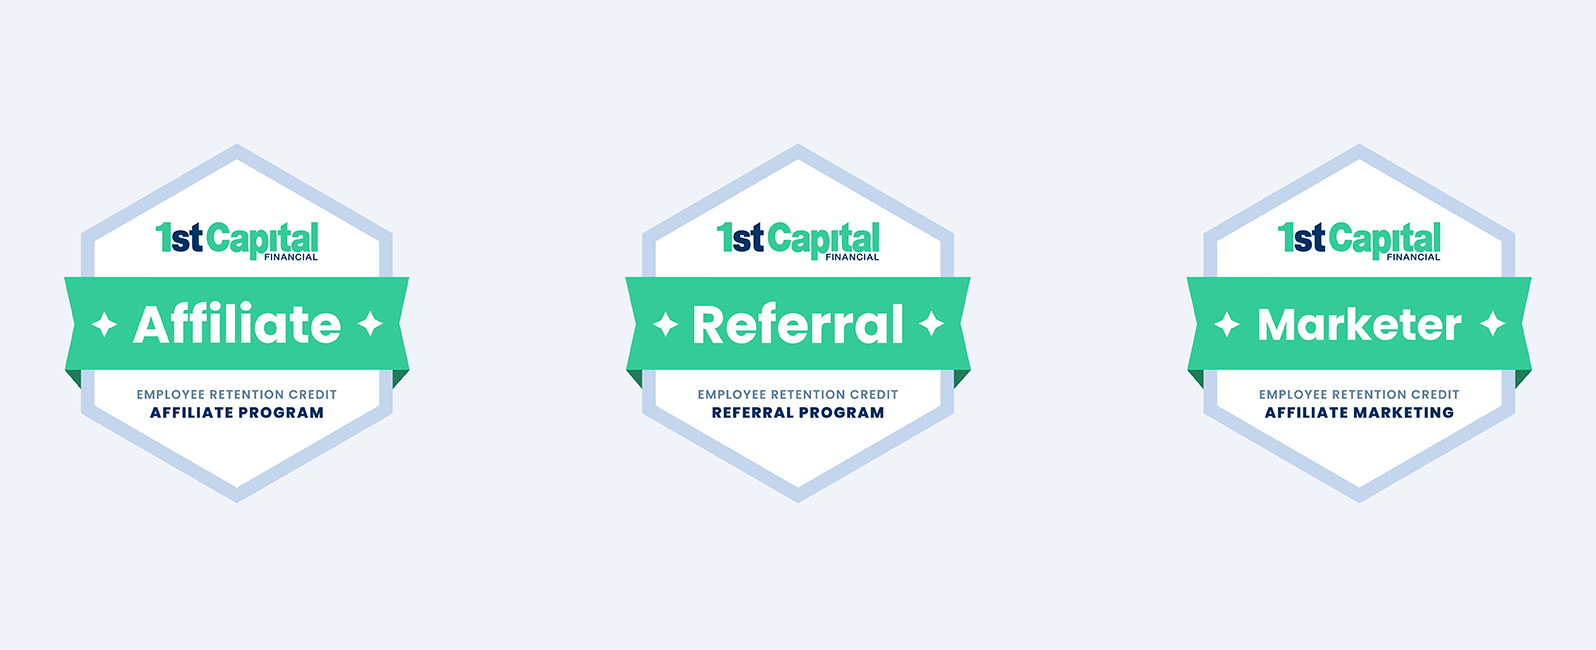 1st Capital Financial's ERC Partner Program Badges